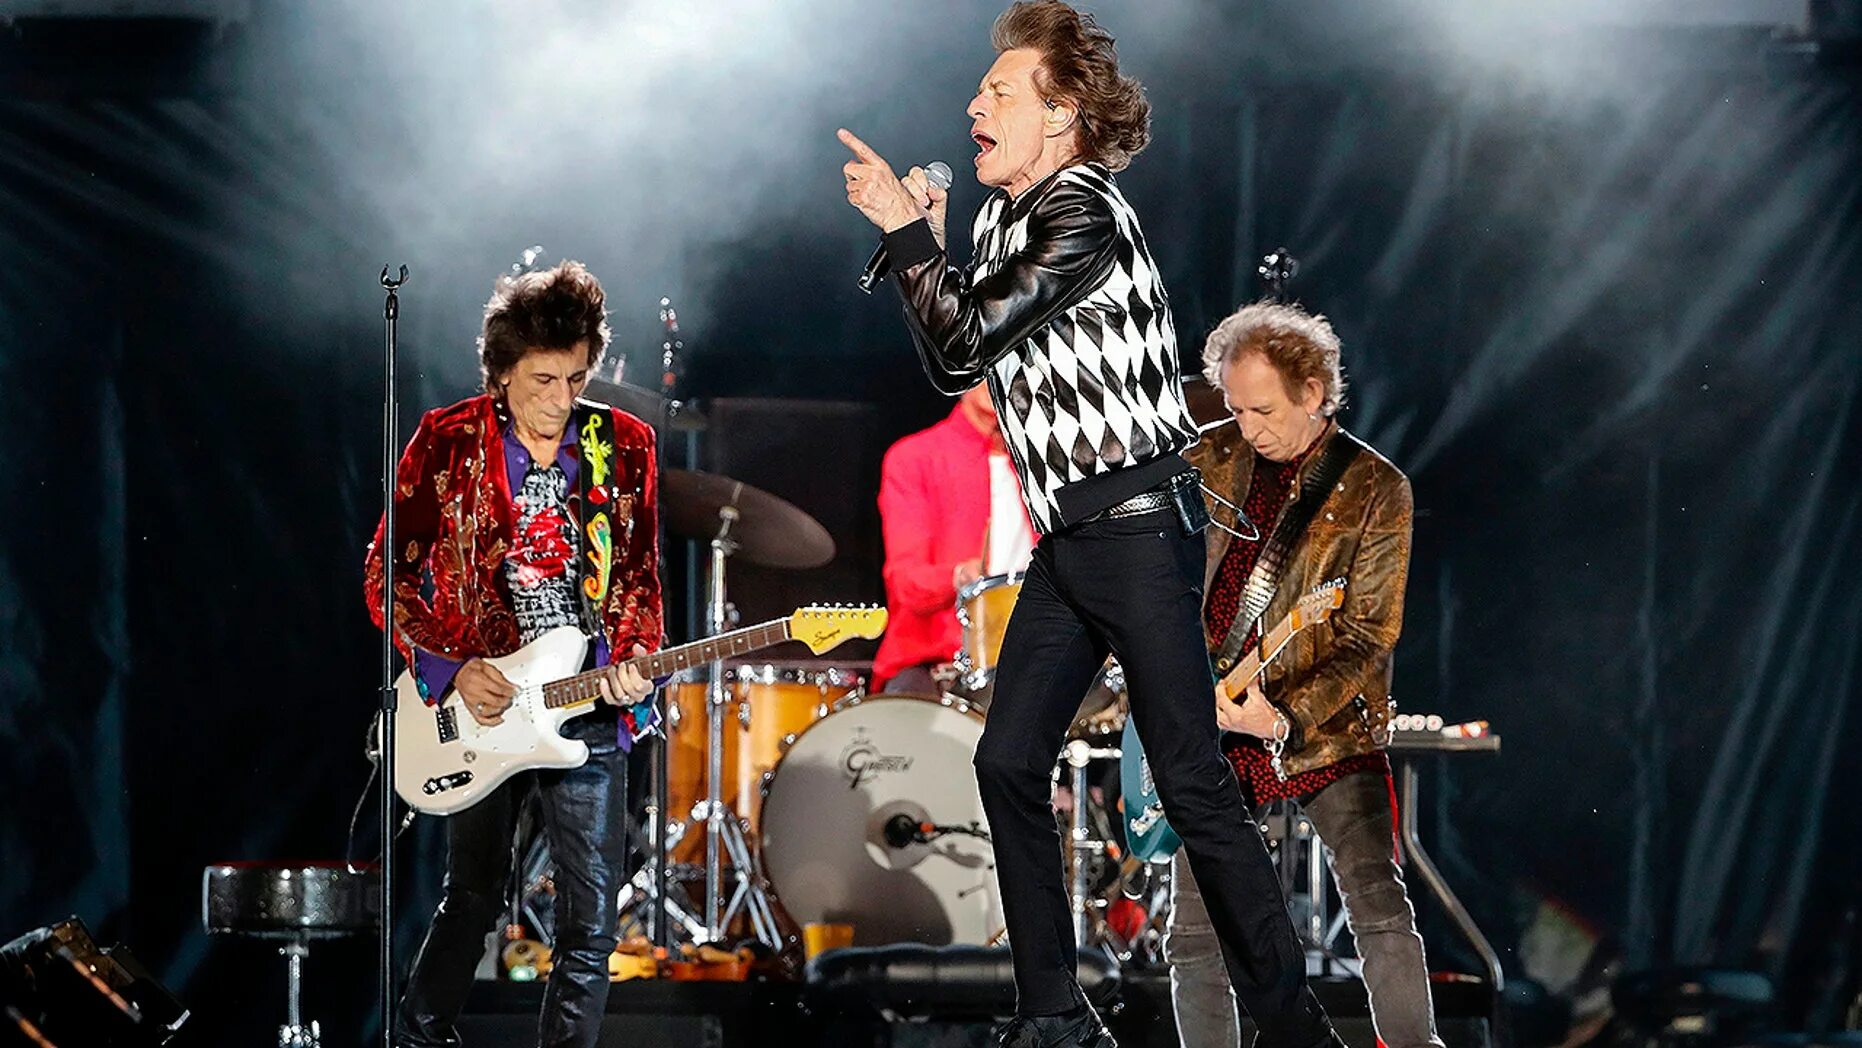 Rolling stones клипы. The Rolling Stones. Барабанщик группы Роллинг стоунз. Rolling Stones фото. Роллинг стоунз день рождения.